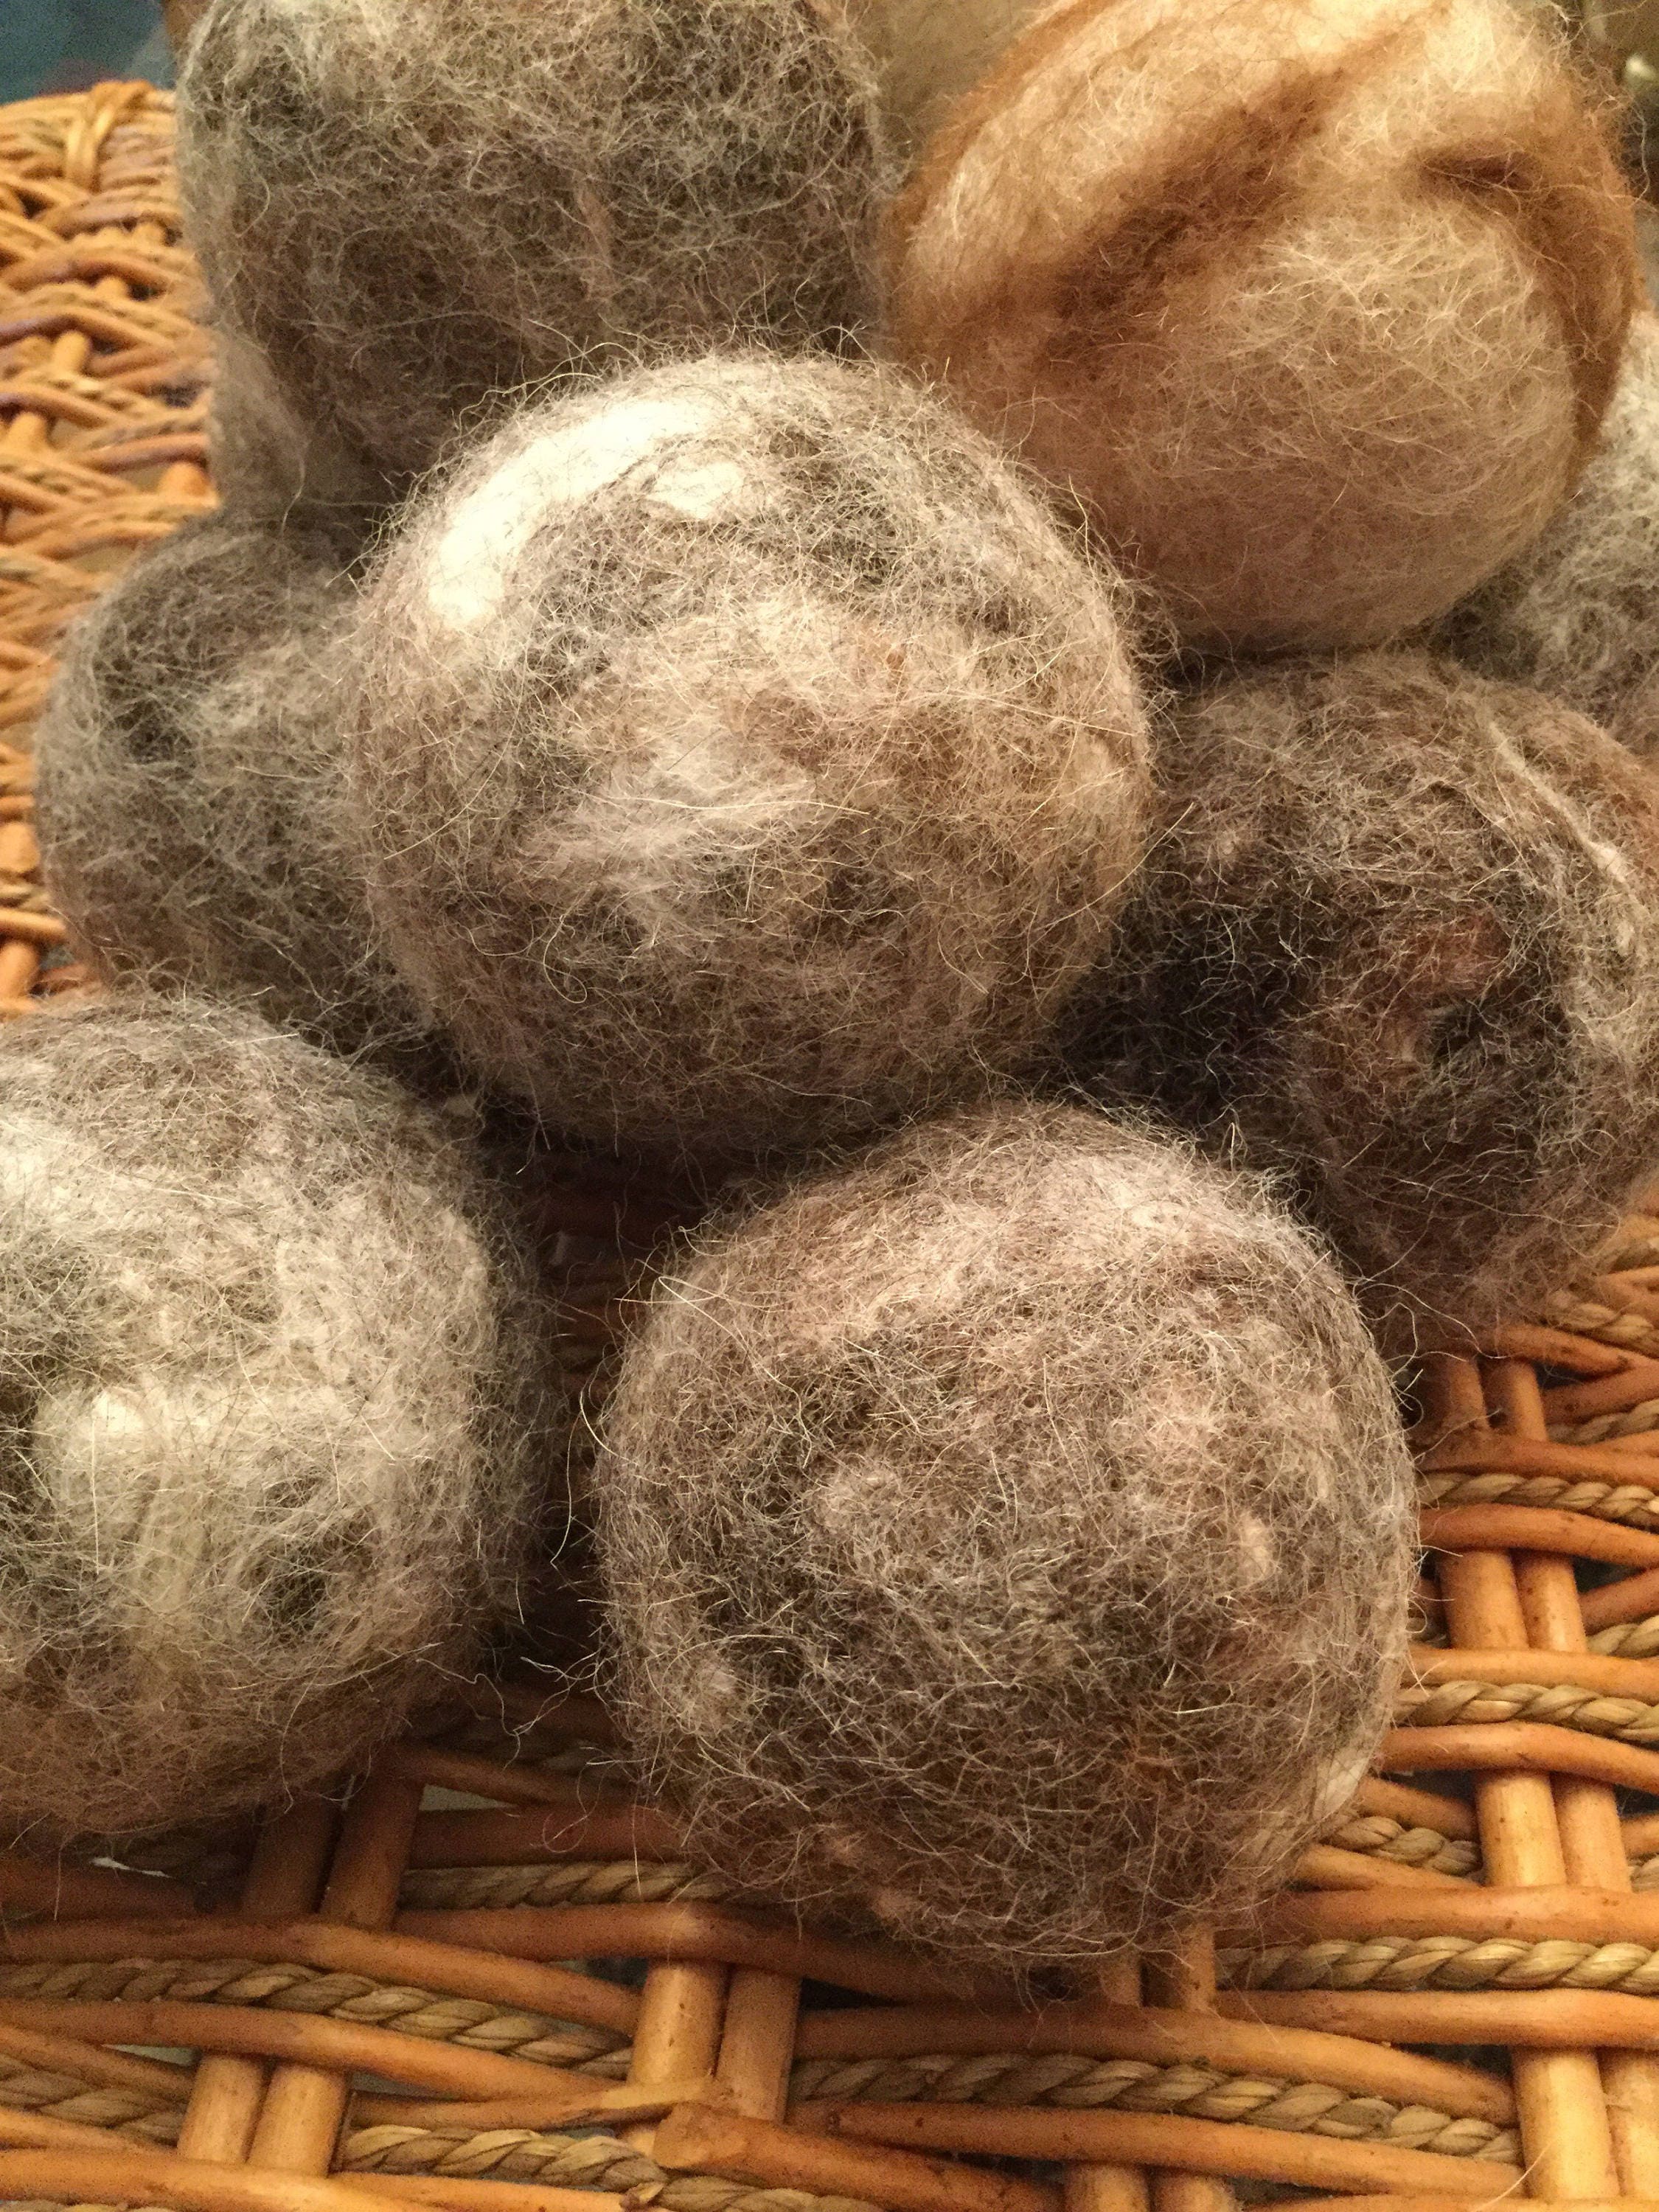 Dryer Balls made from 100% Alpaca Fiber  (set of 3)